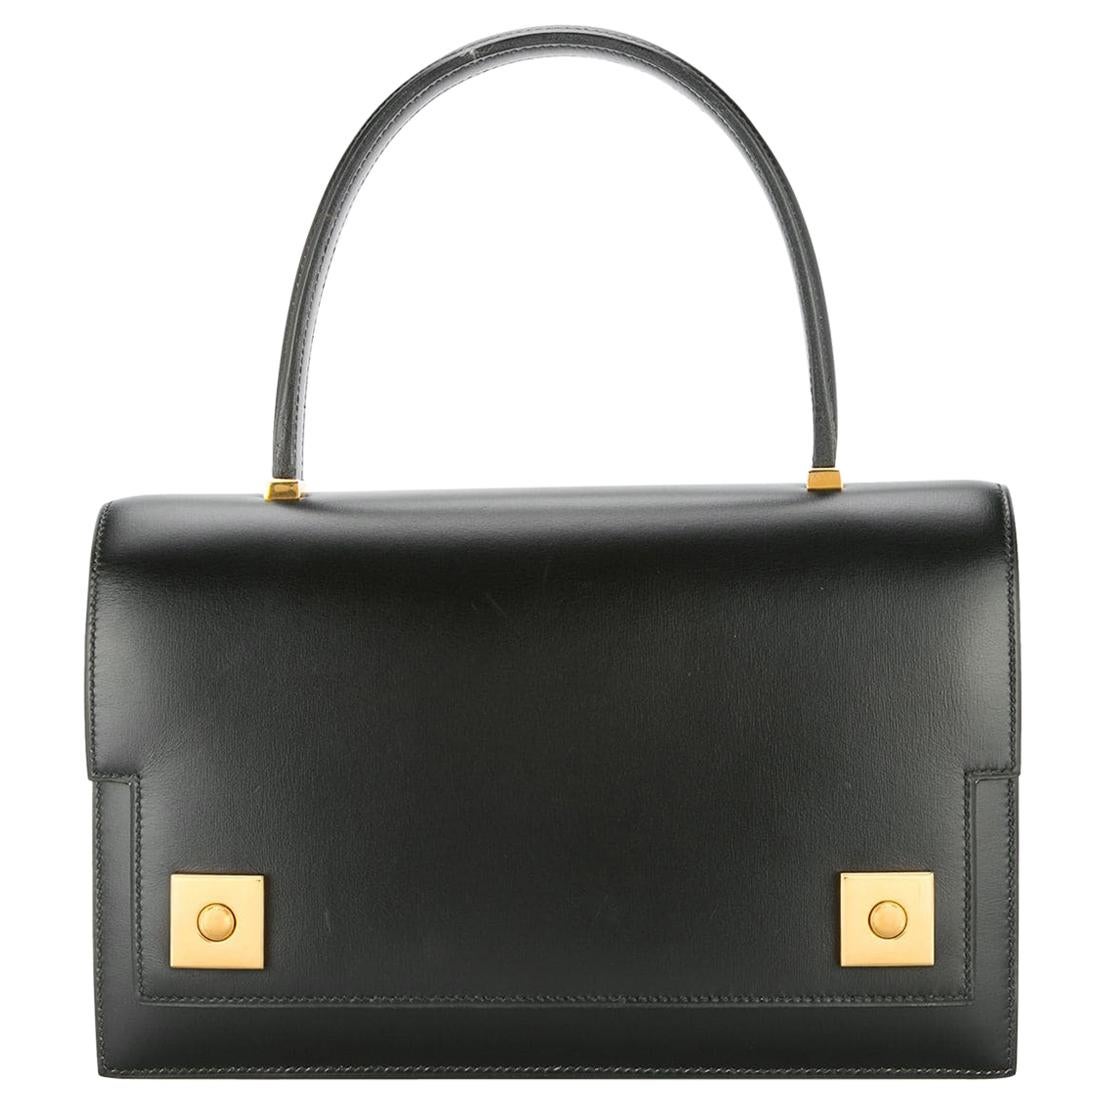 Hermes Black Leather Evening Gold Stud Top Handle Satchel Kelly Style Bag